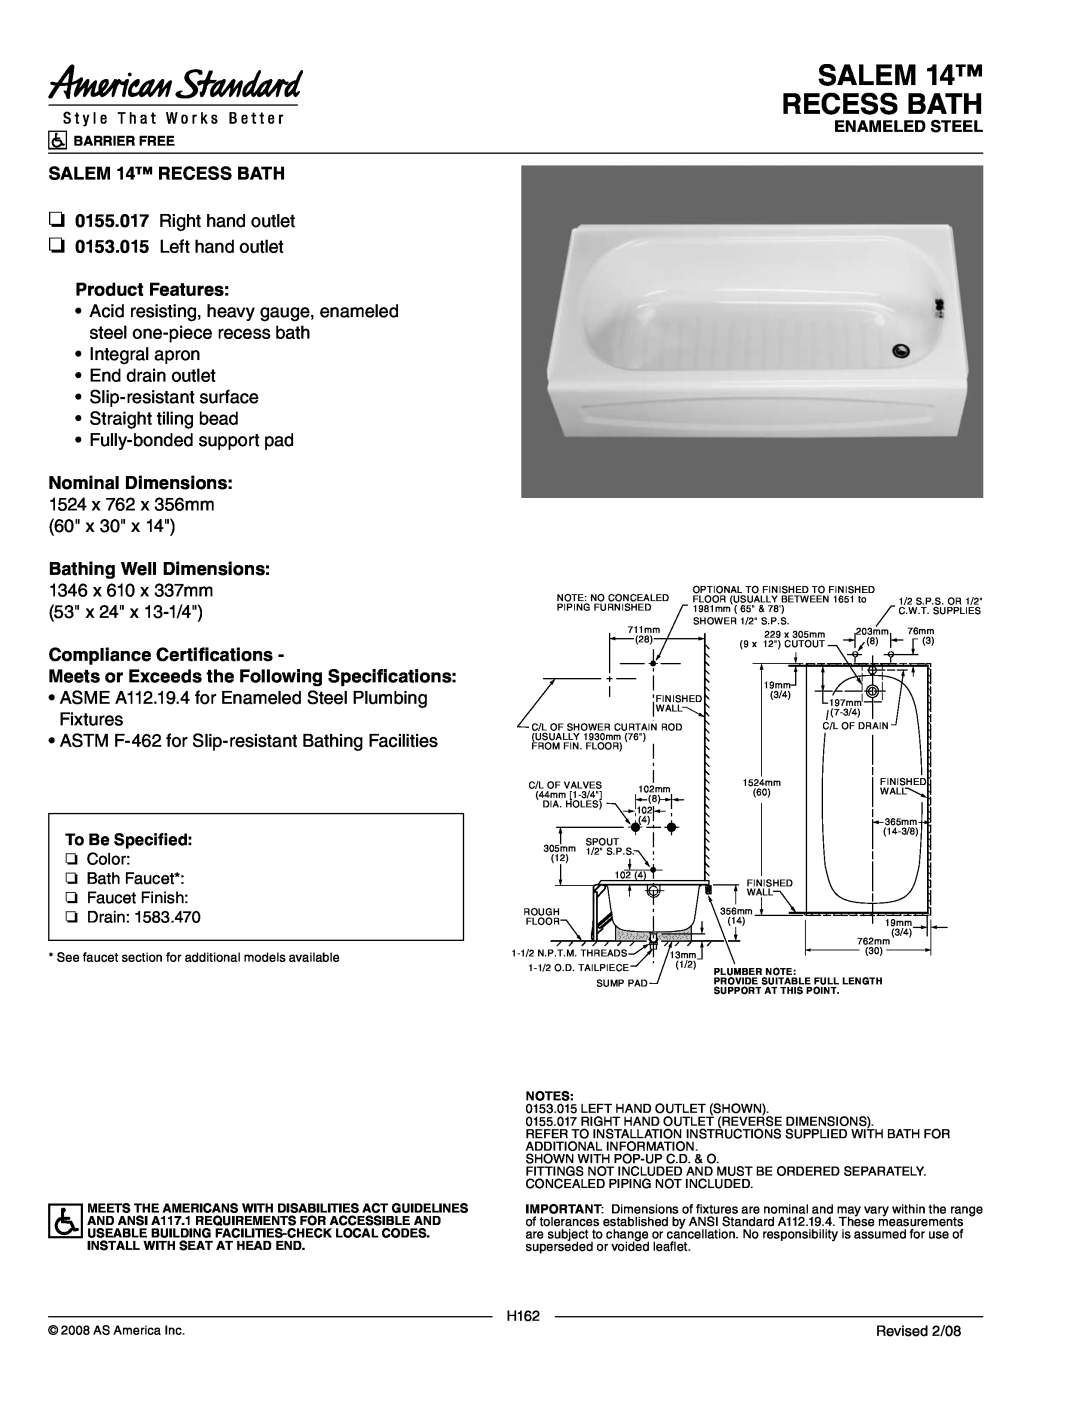 American Standard 0155.017 dimensions Salem Recess Bath, SALEM 14 RECESS BATH, Right hand outlet 0153.015 Left hand outlet 